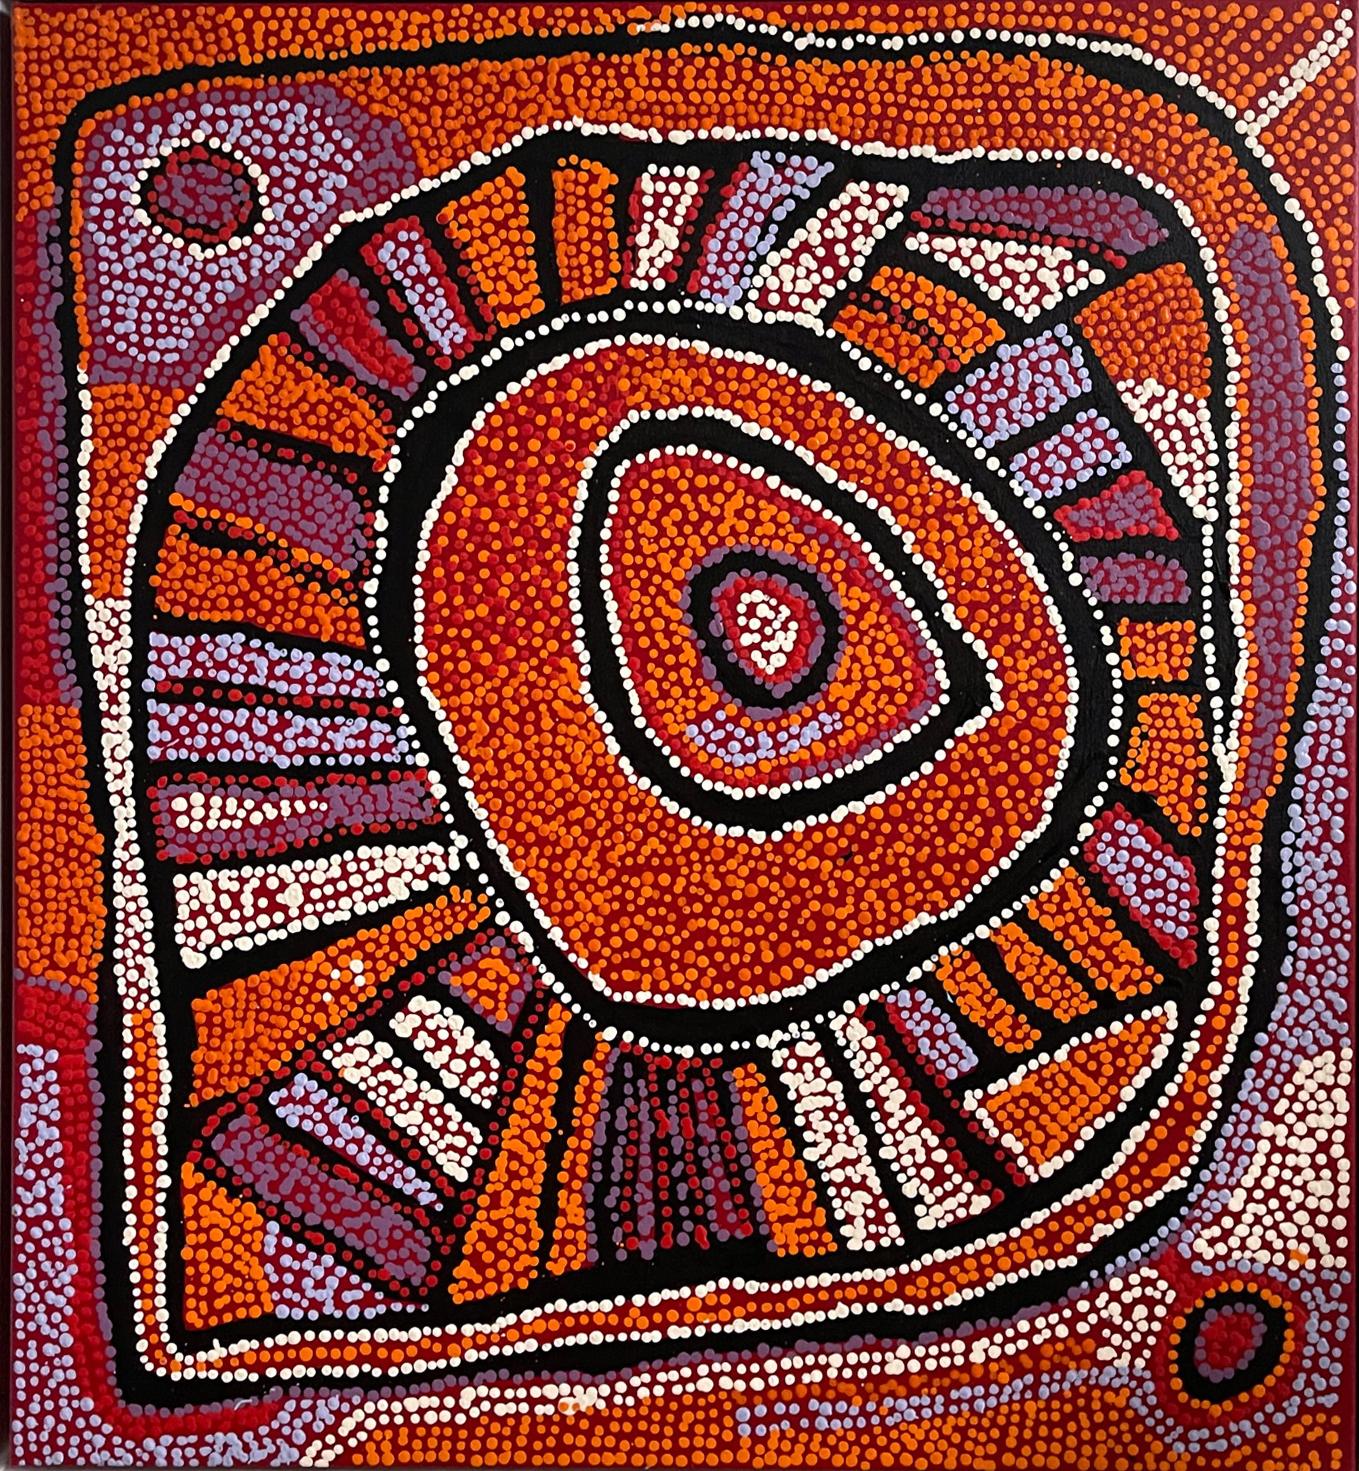 aboriginal painting for kids